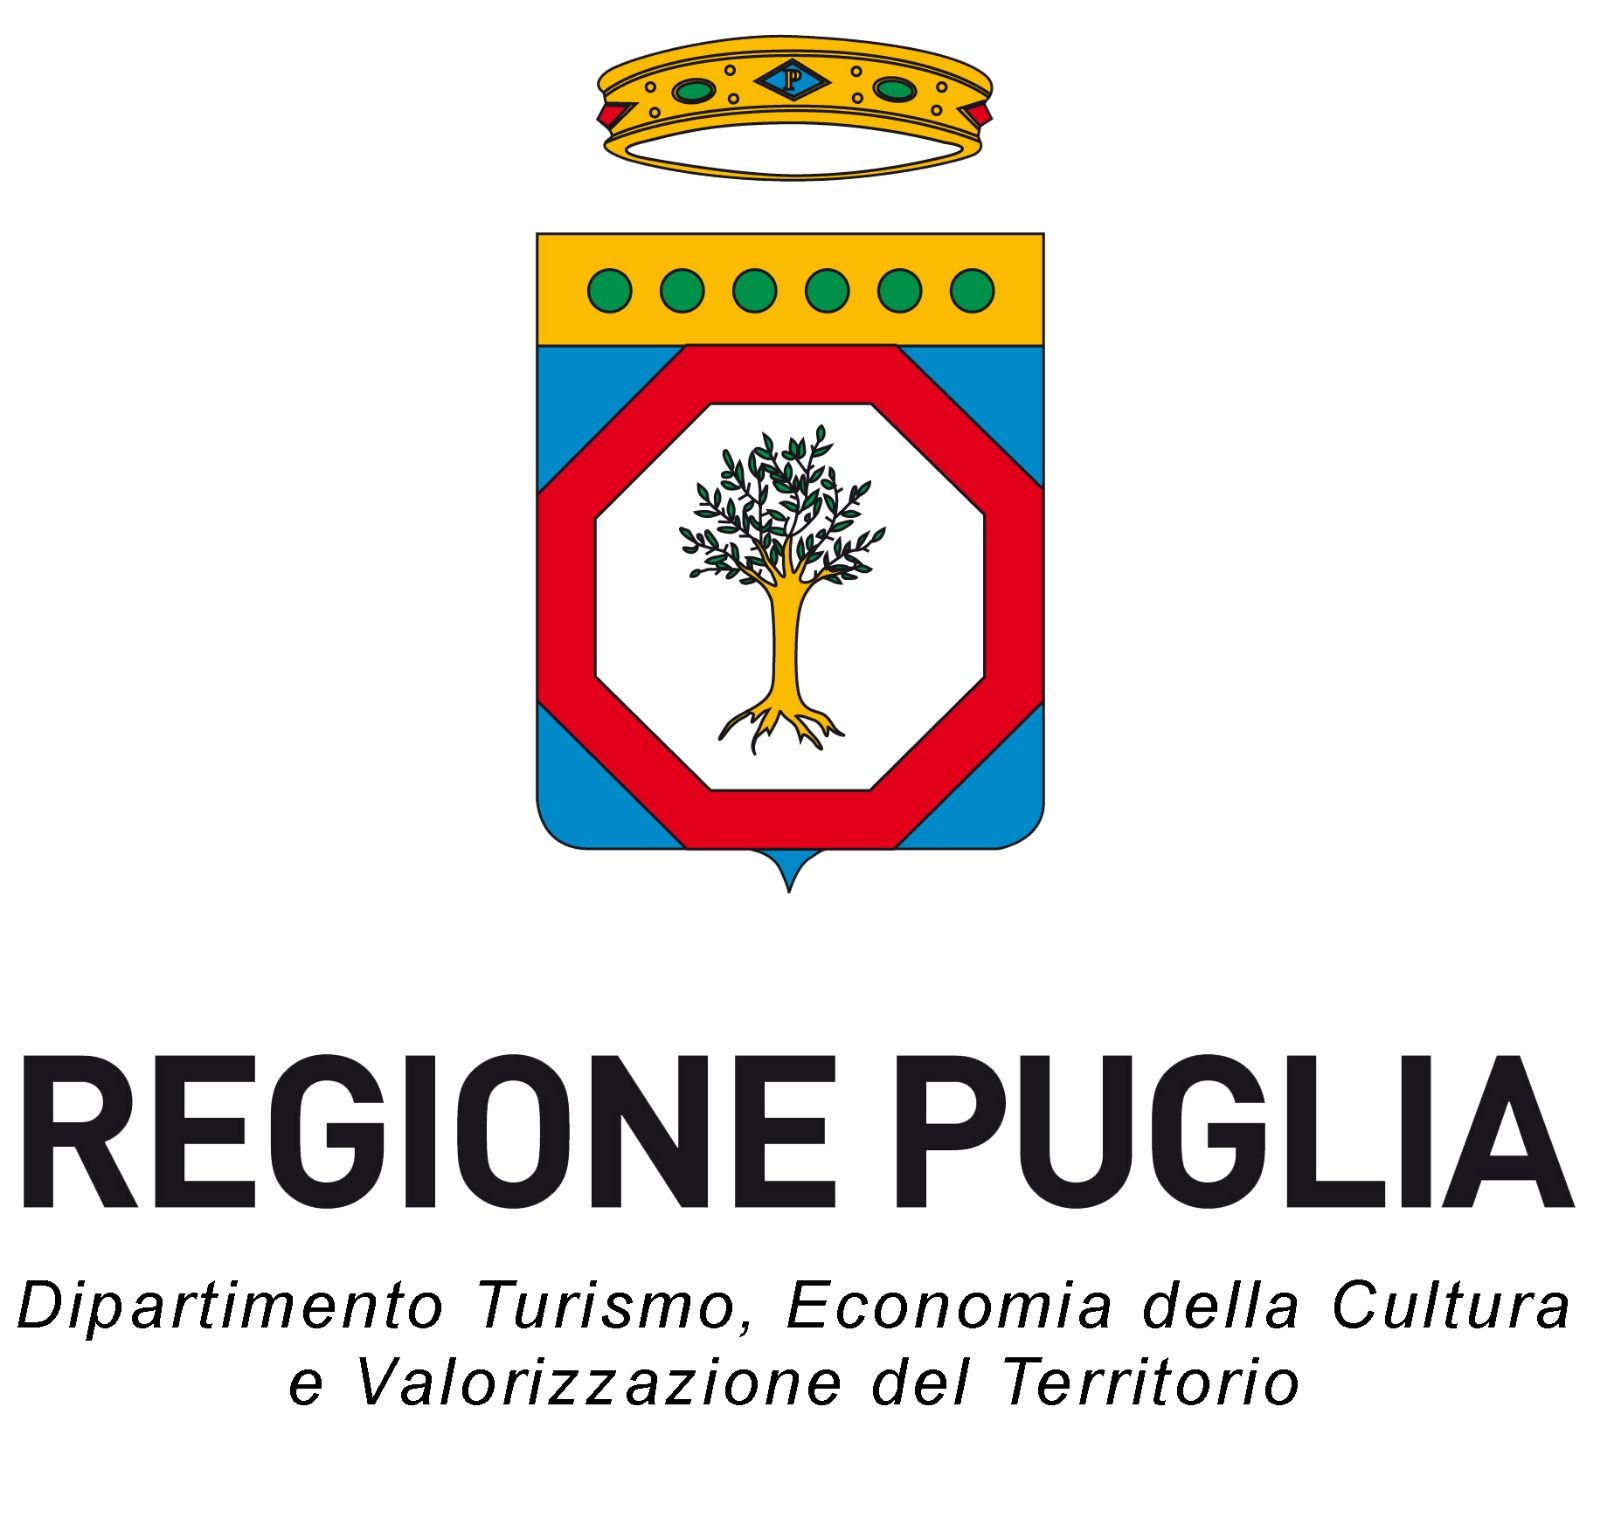 The Puglia Region seeks an Animation Training Expert